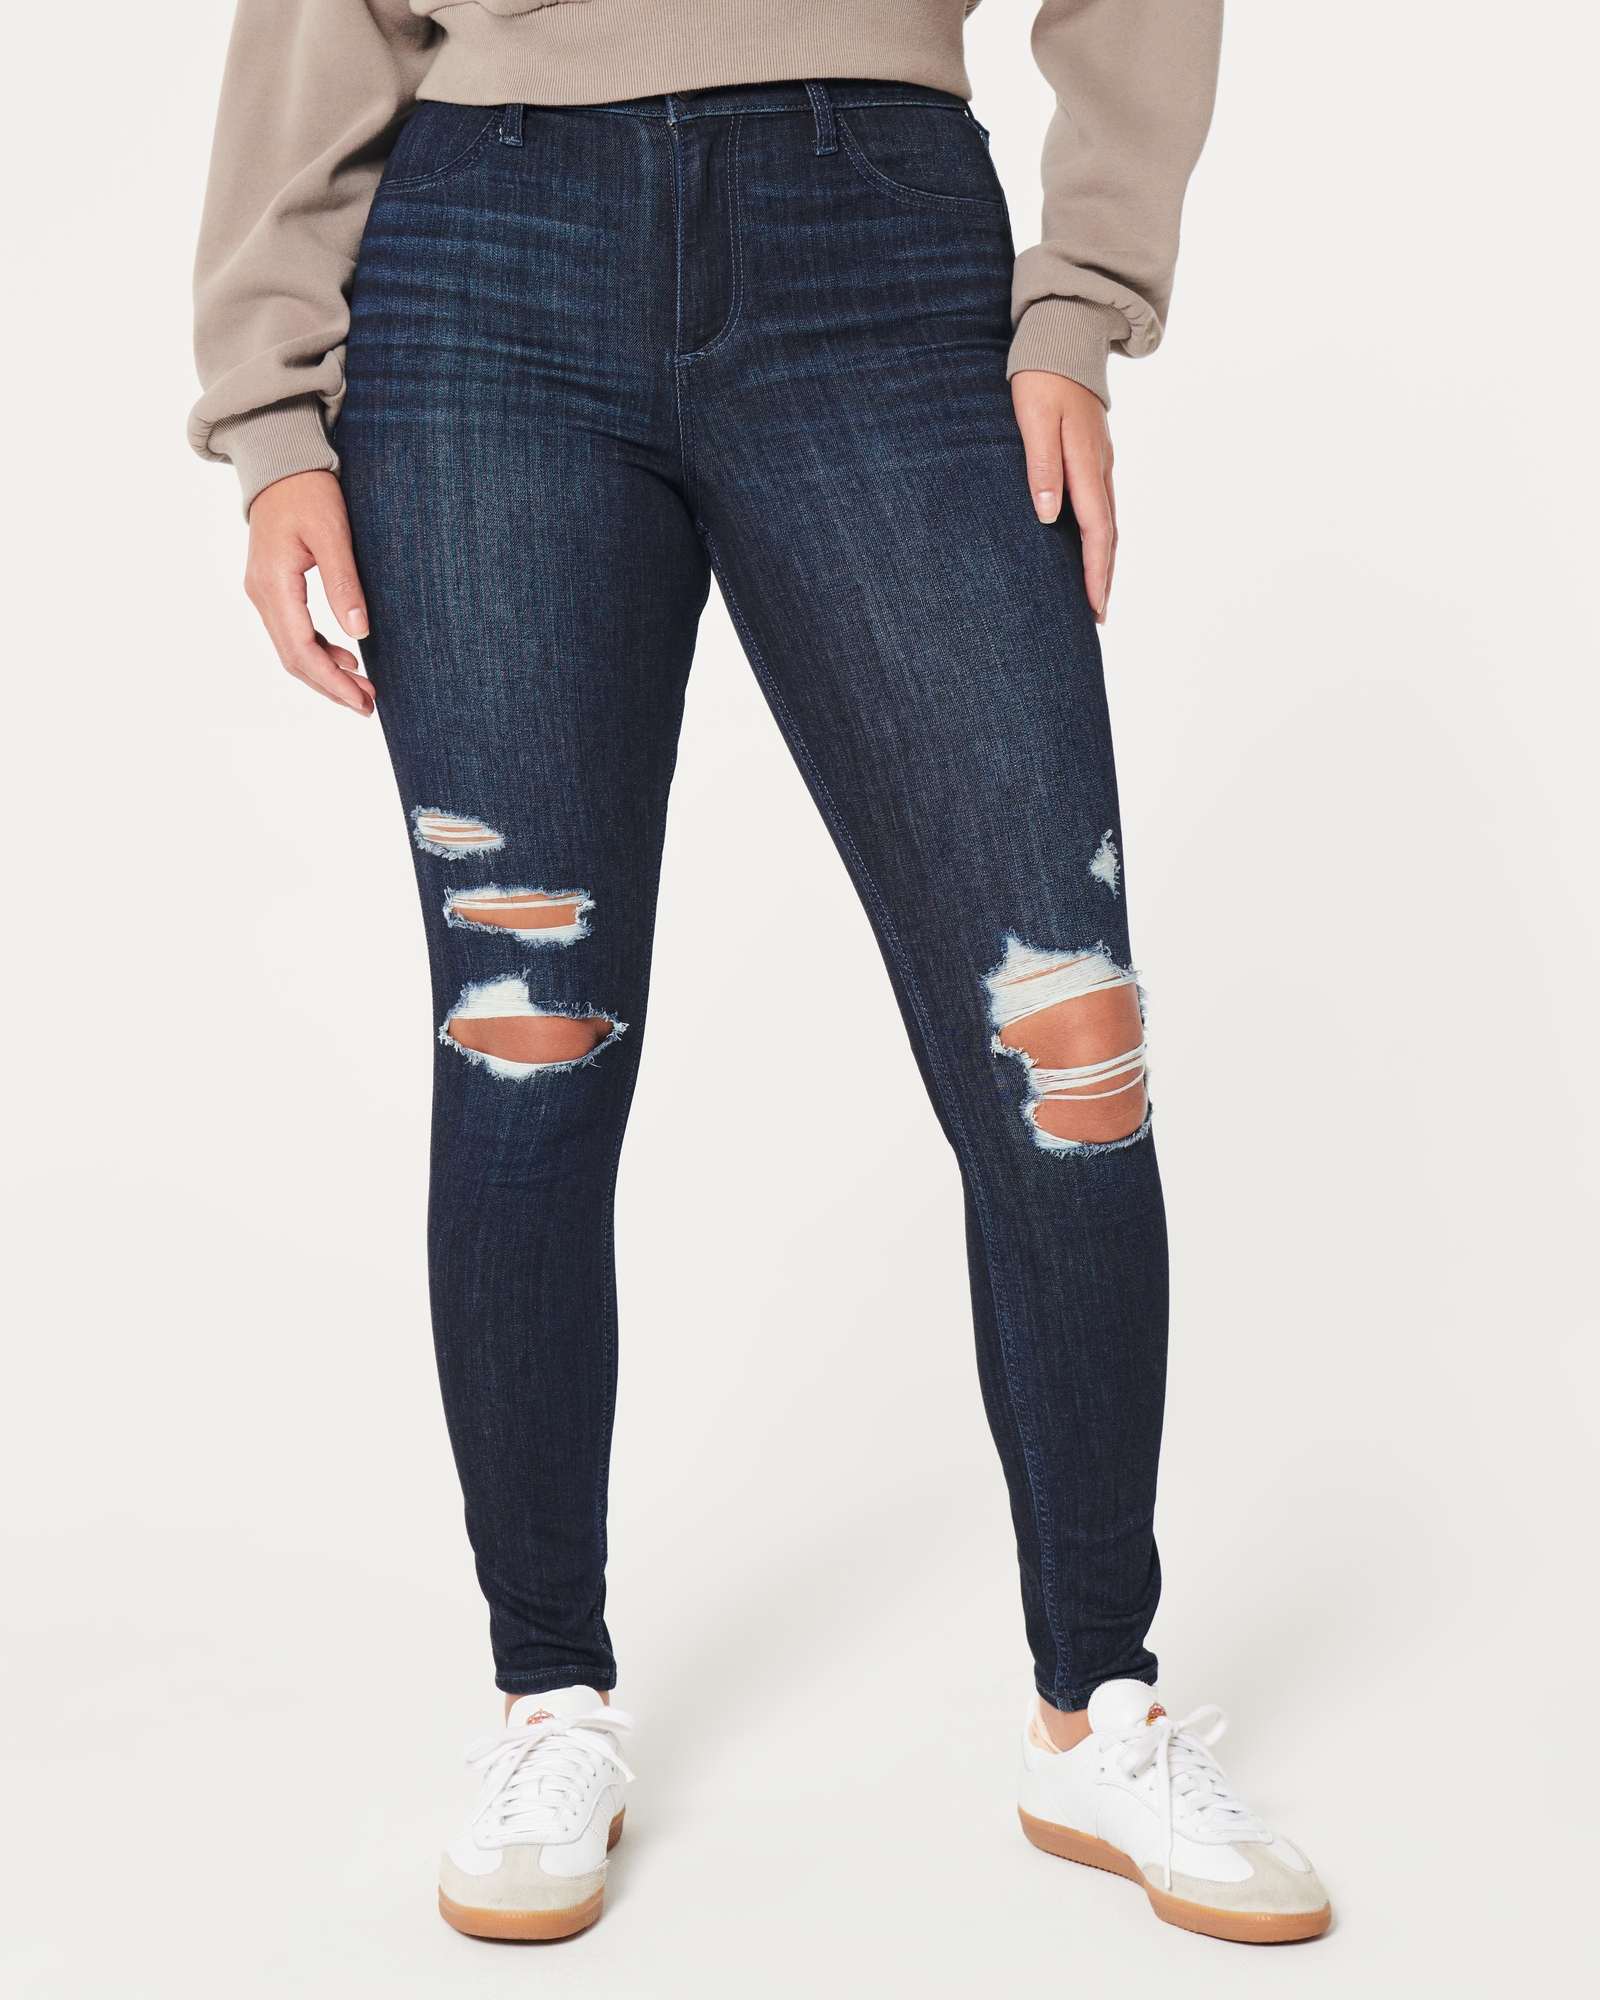 J Brand Jeans Womens Leggings 901VO241 Mojave Waxed 6198 RN#117965 - Size 25